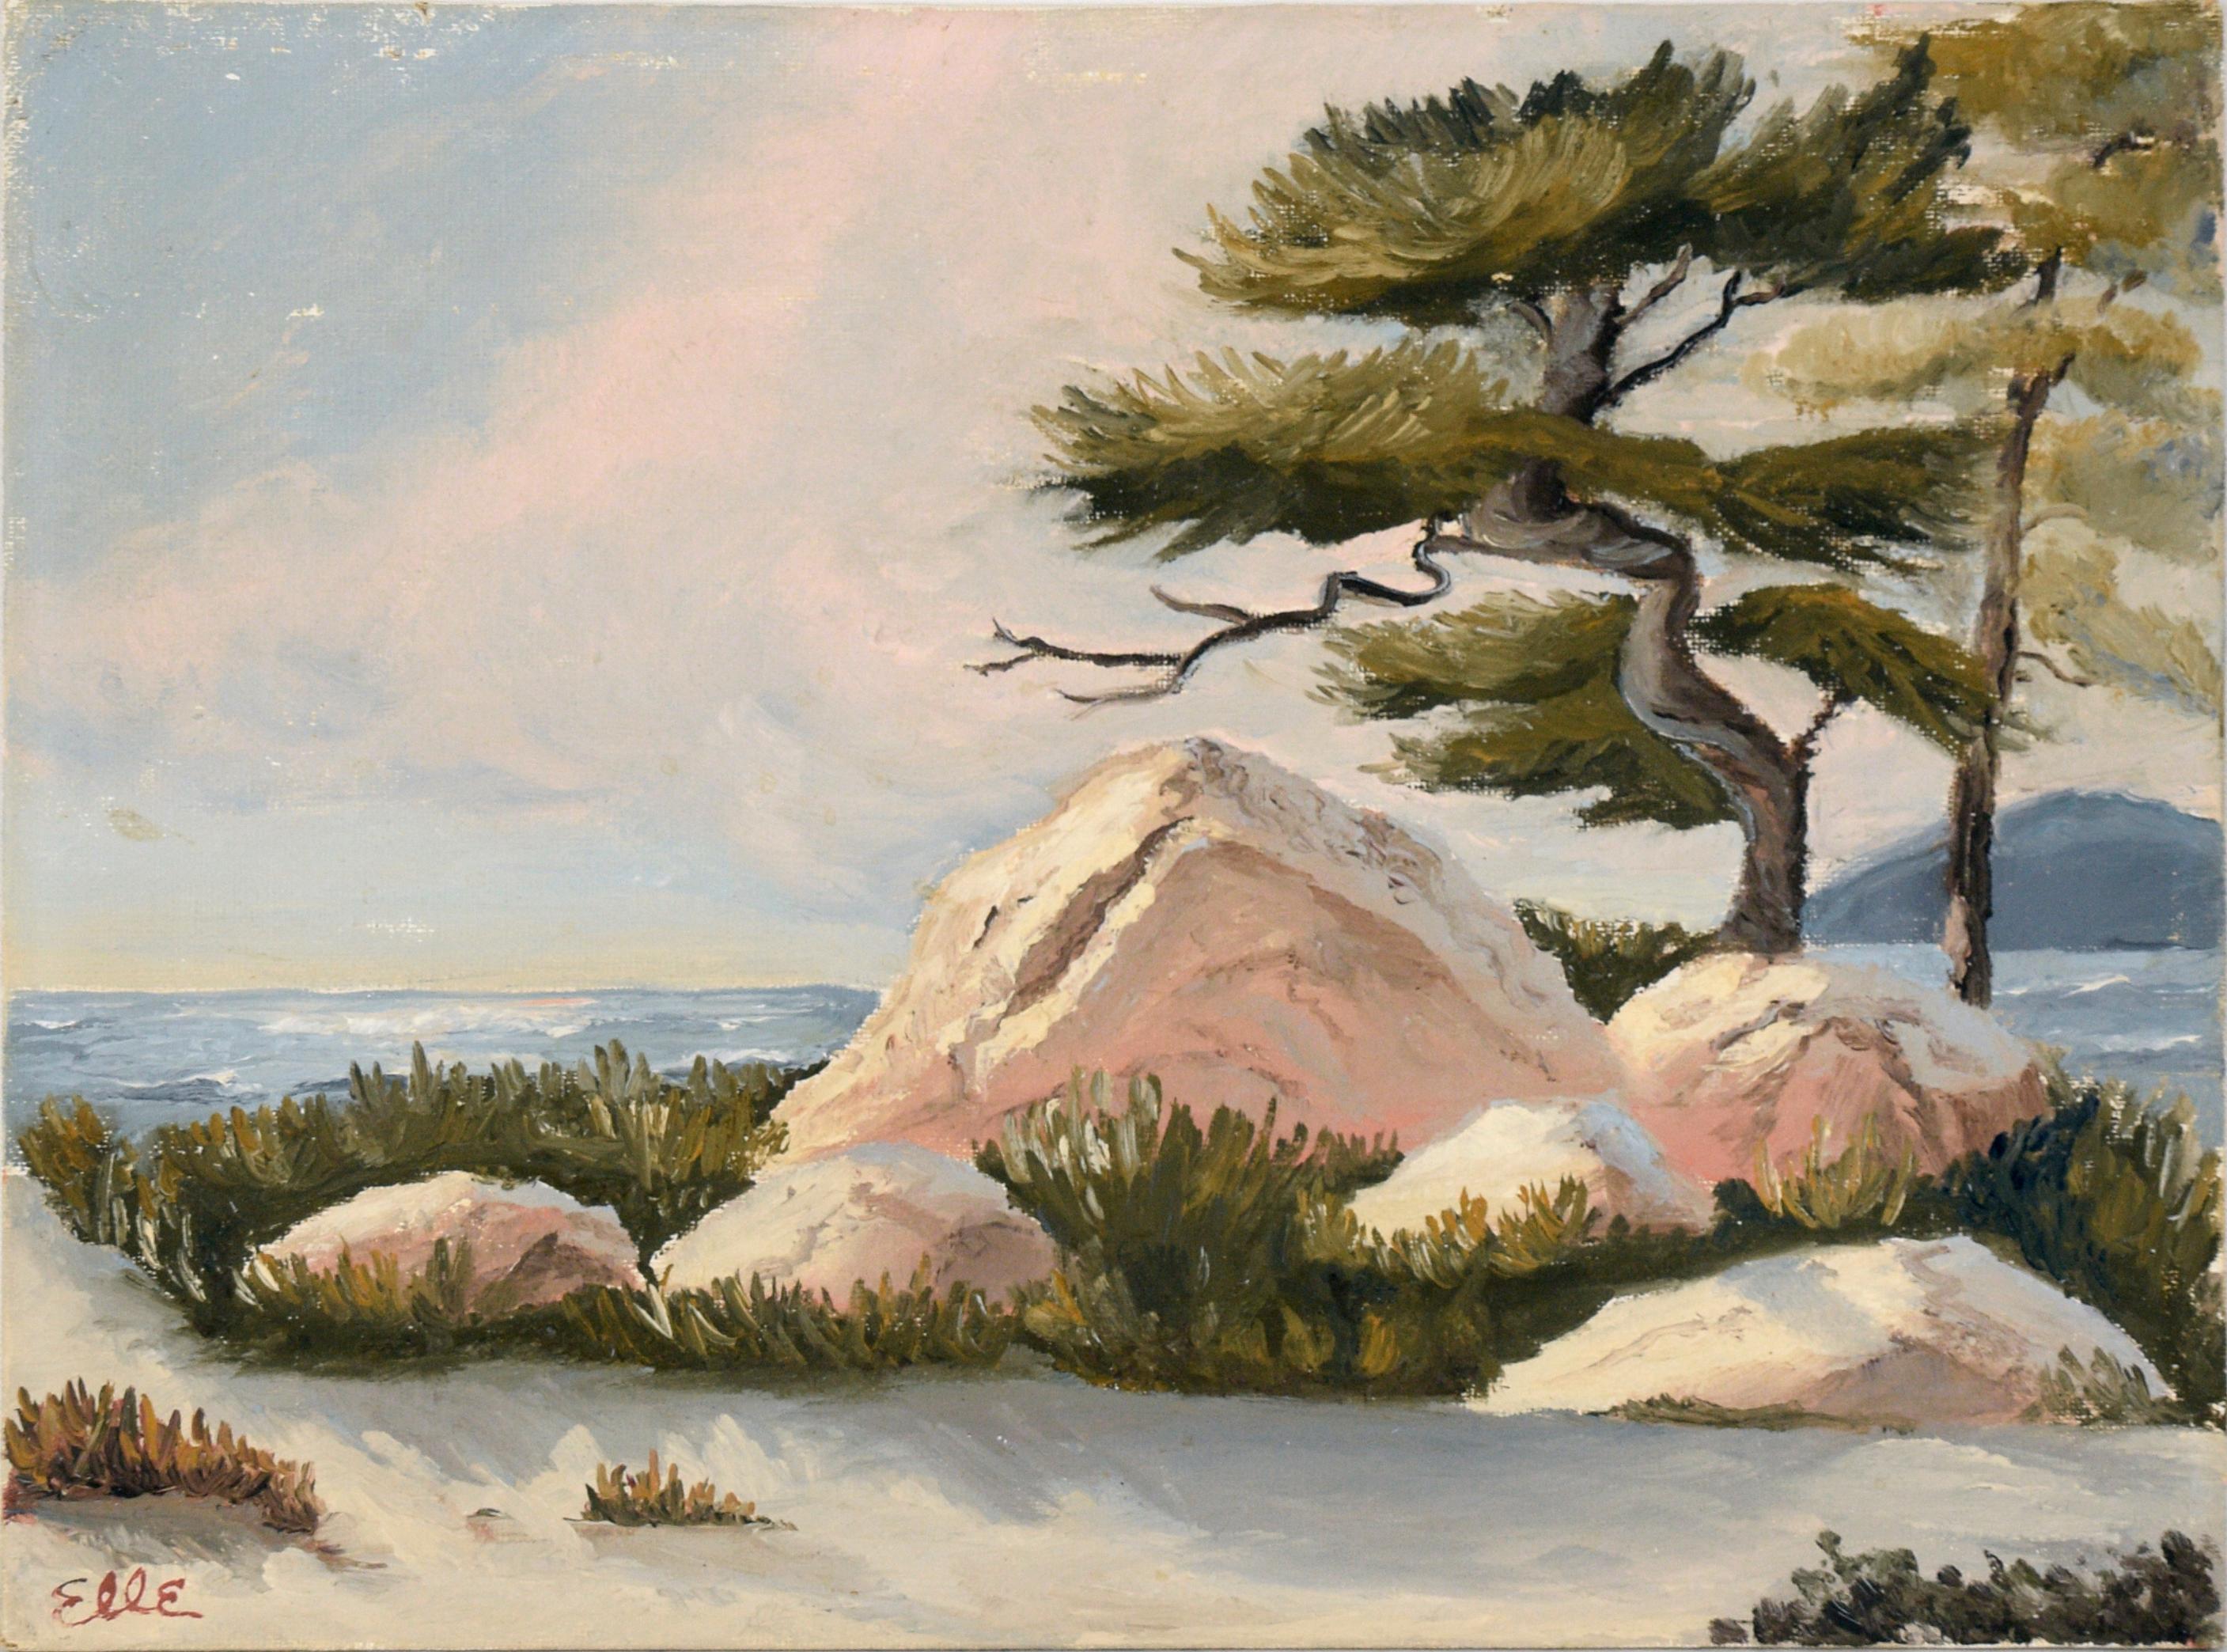 Carmel Beach Landscape - Oil on Artist's Board - Painting by Unknown